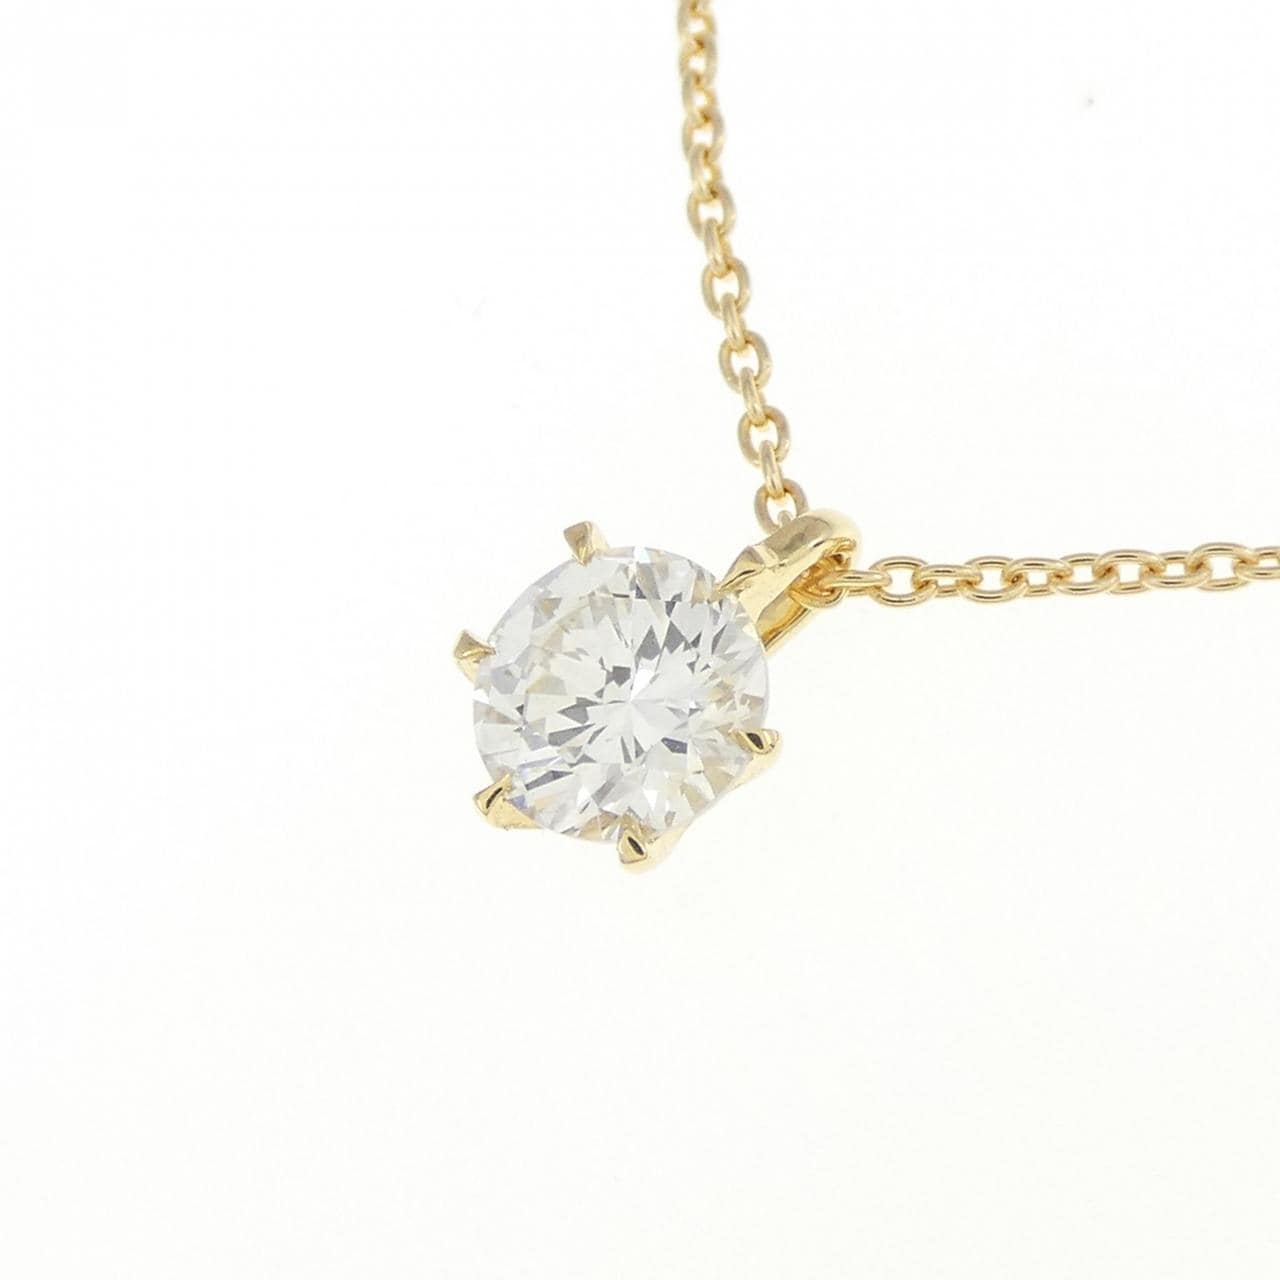 K18YG Diamond Necklace 0.393CT H I1 Good